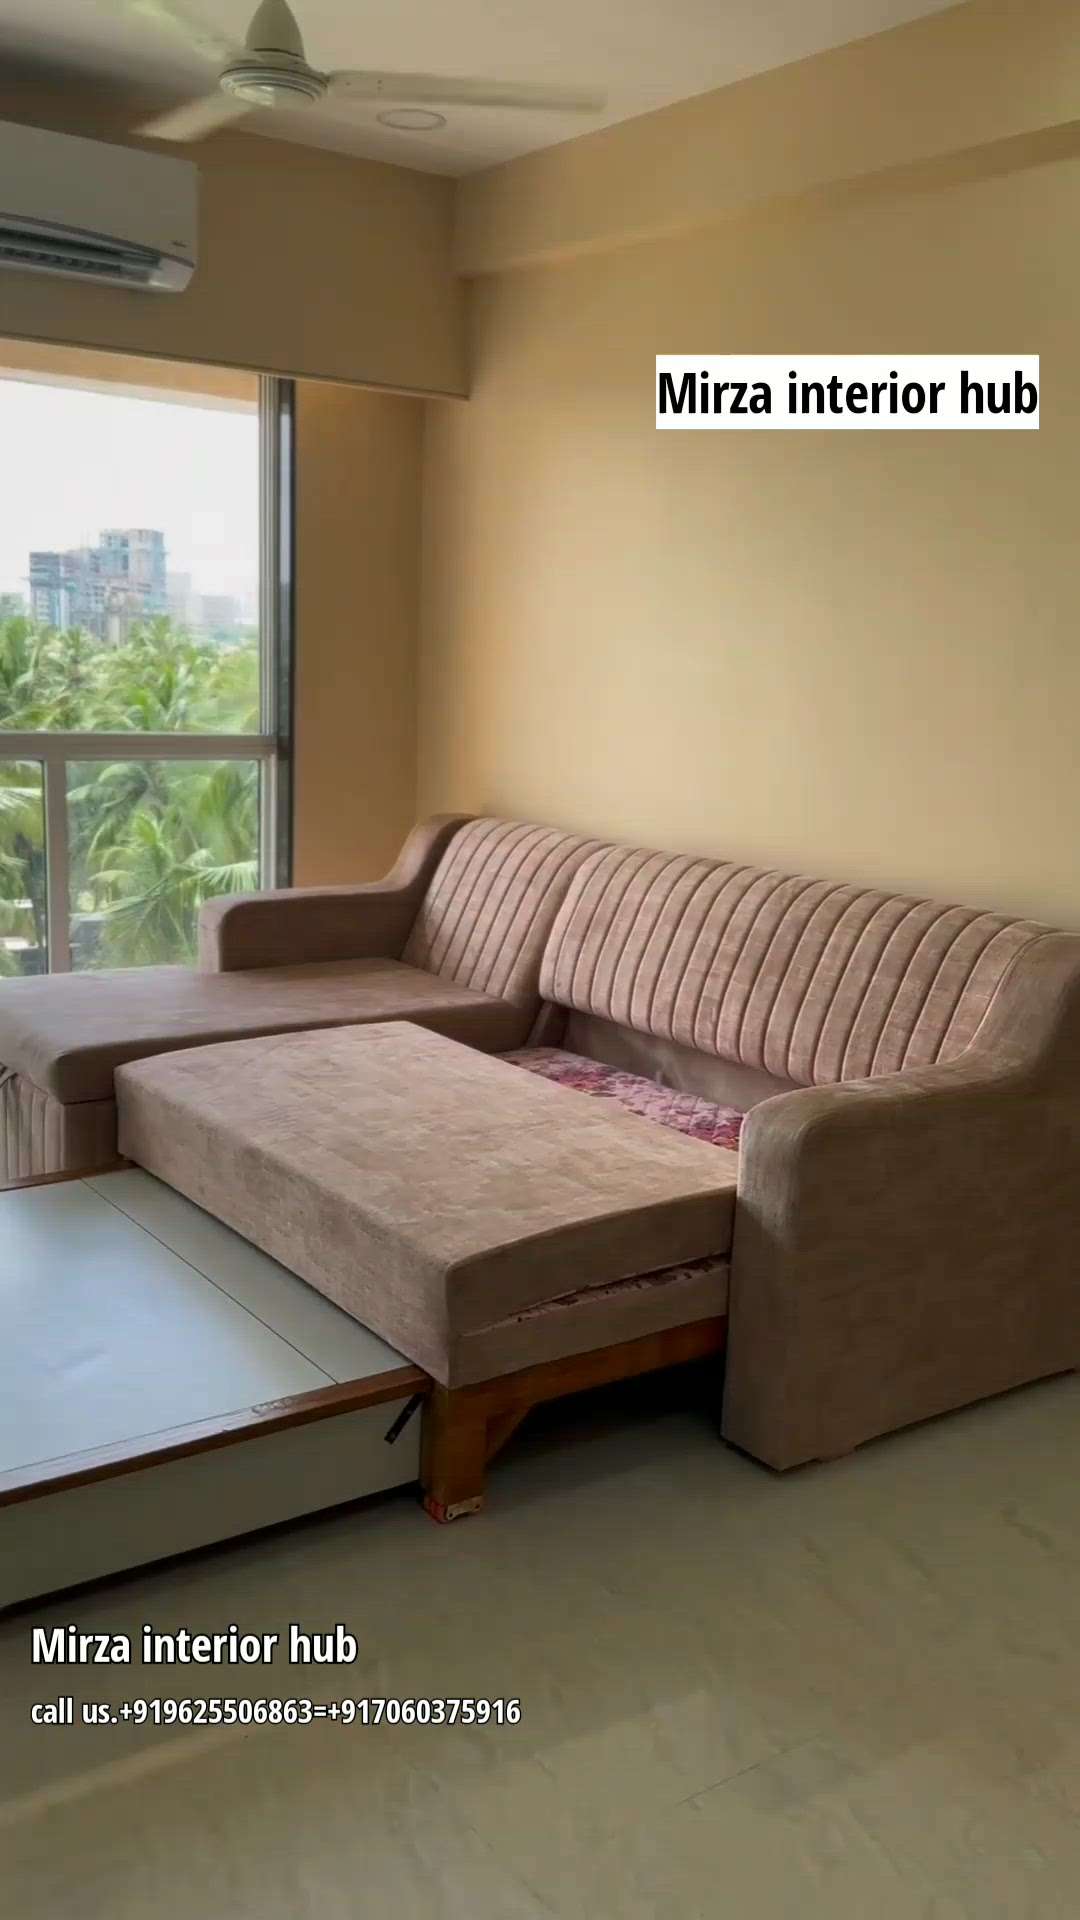 #sofacumbed  #LivingRoomSofa  #lshapesofa  #InteriorDesigner  #HomeDecor  #furniture   #contactme.+919625506863=+917060375916 #saquib  #Mirza